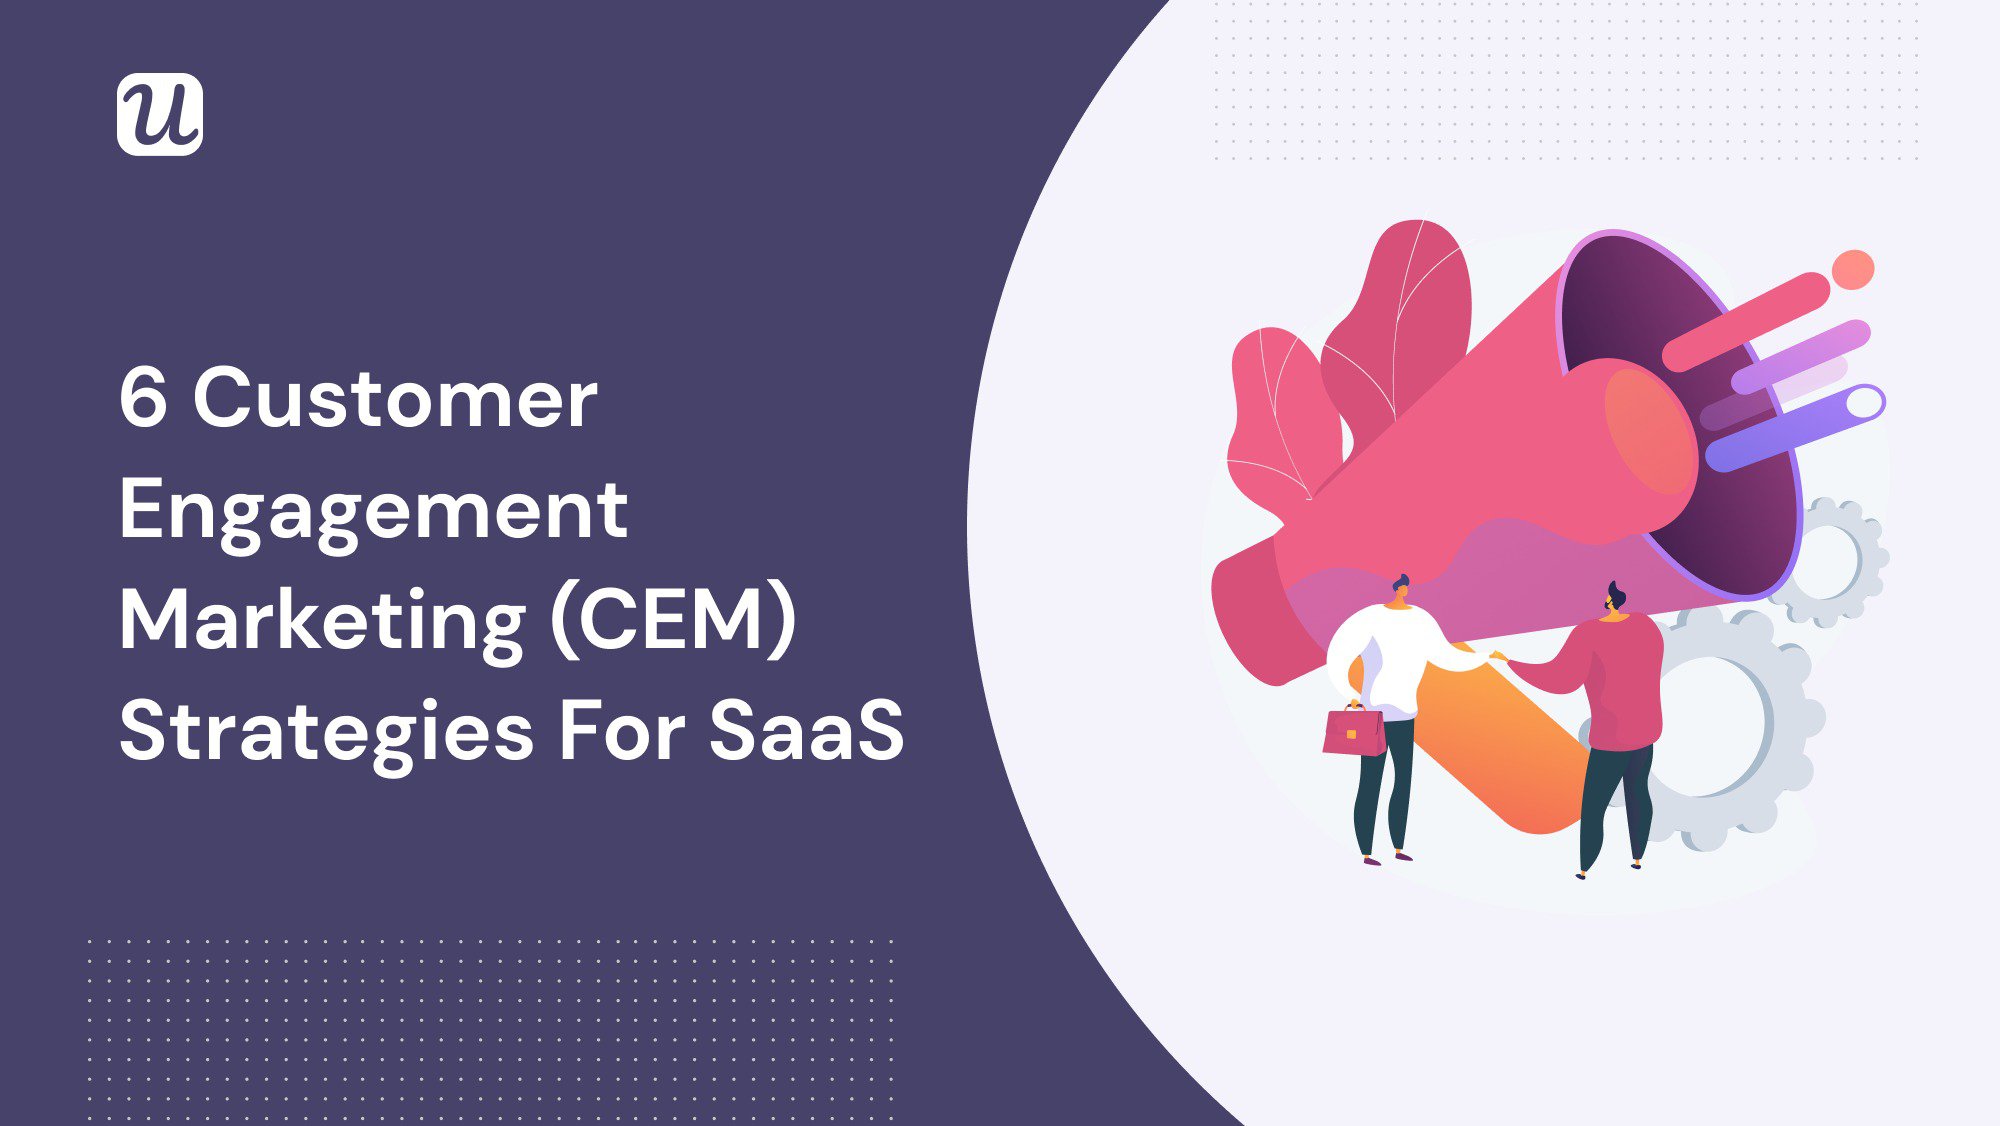 6 Customer Engagement Marketing (CEM) Strategies for SaaS